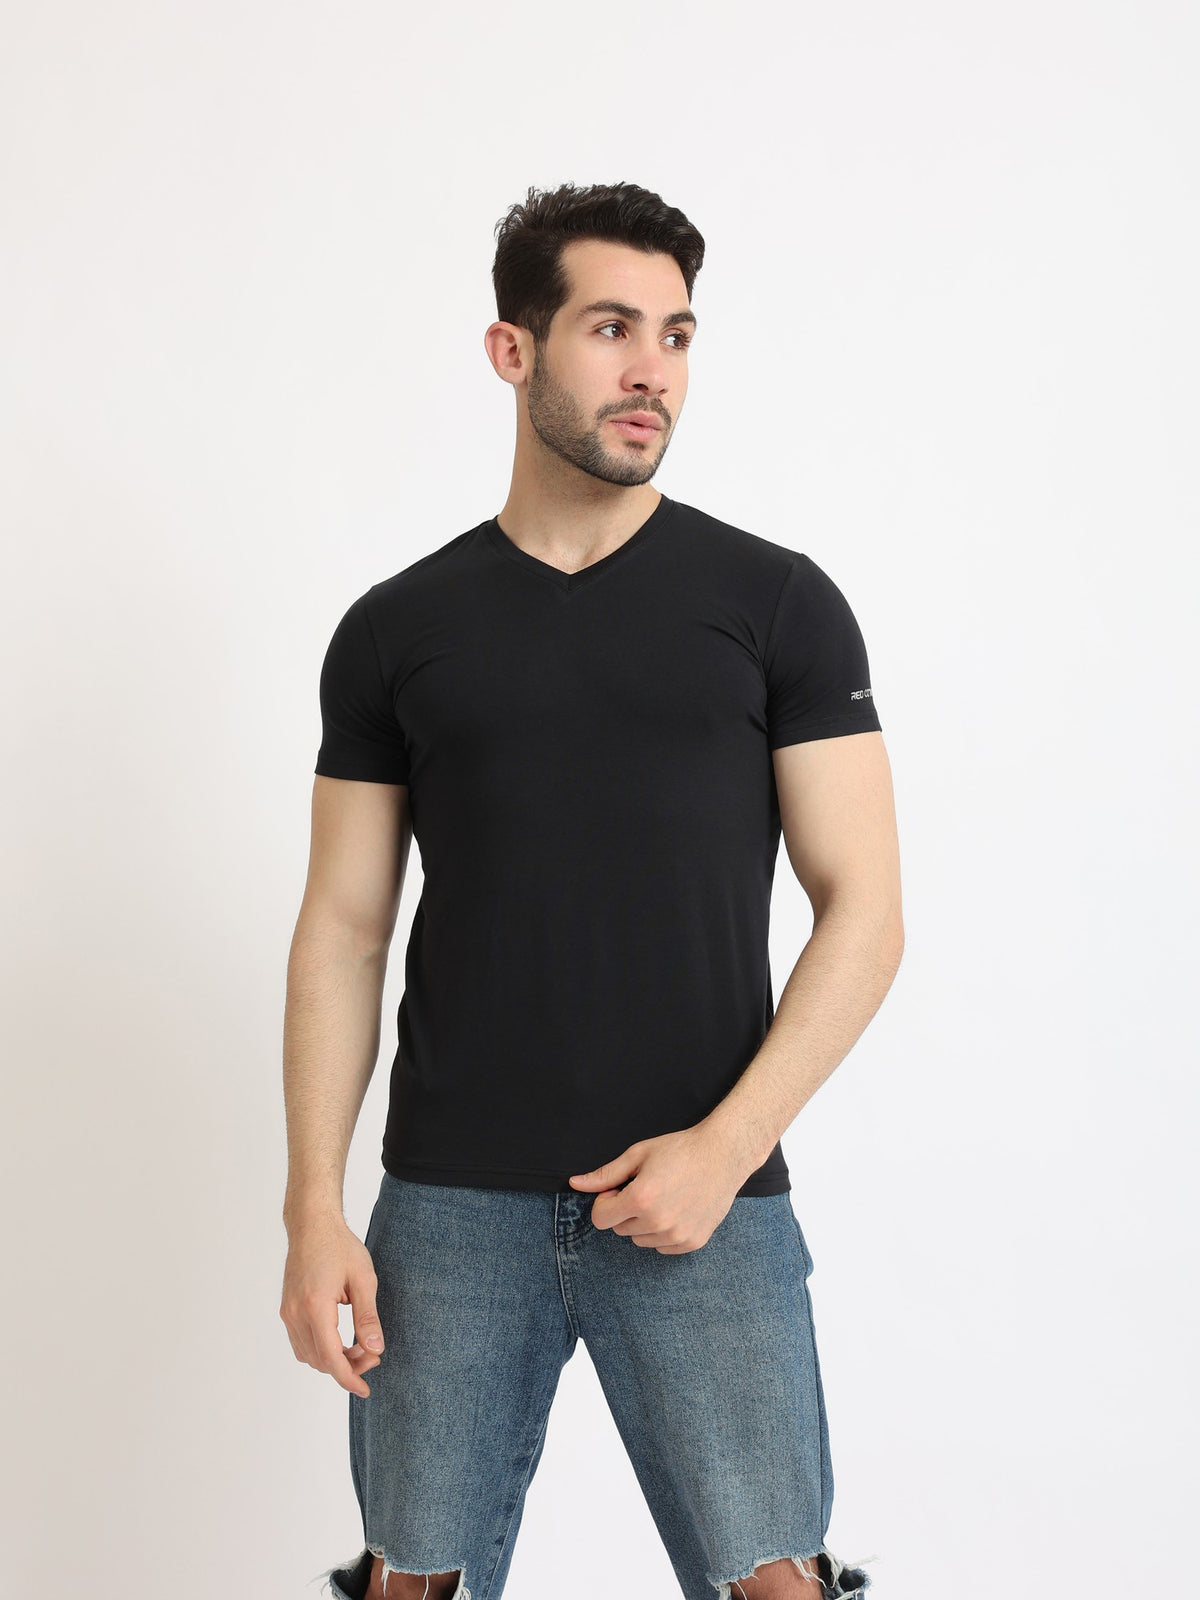 Undershirt for men, short sleeves, Regural fit from Red Cotton-Black